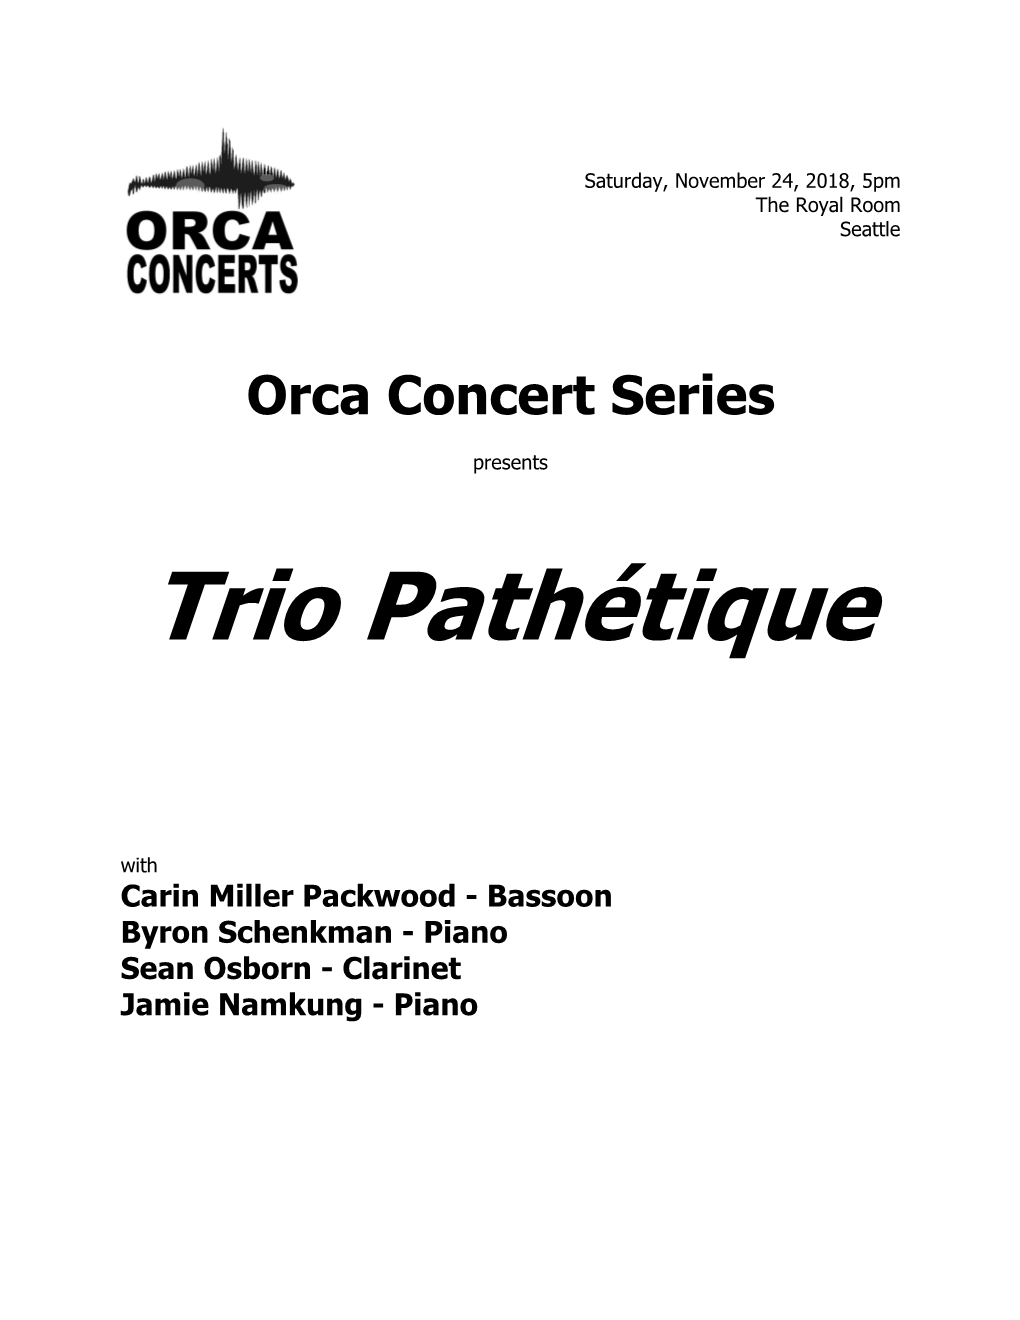 Trio Pathetique Program